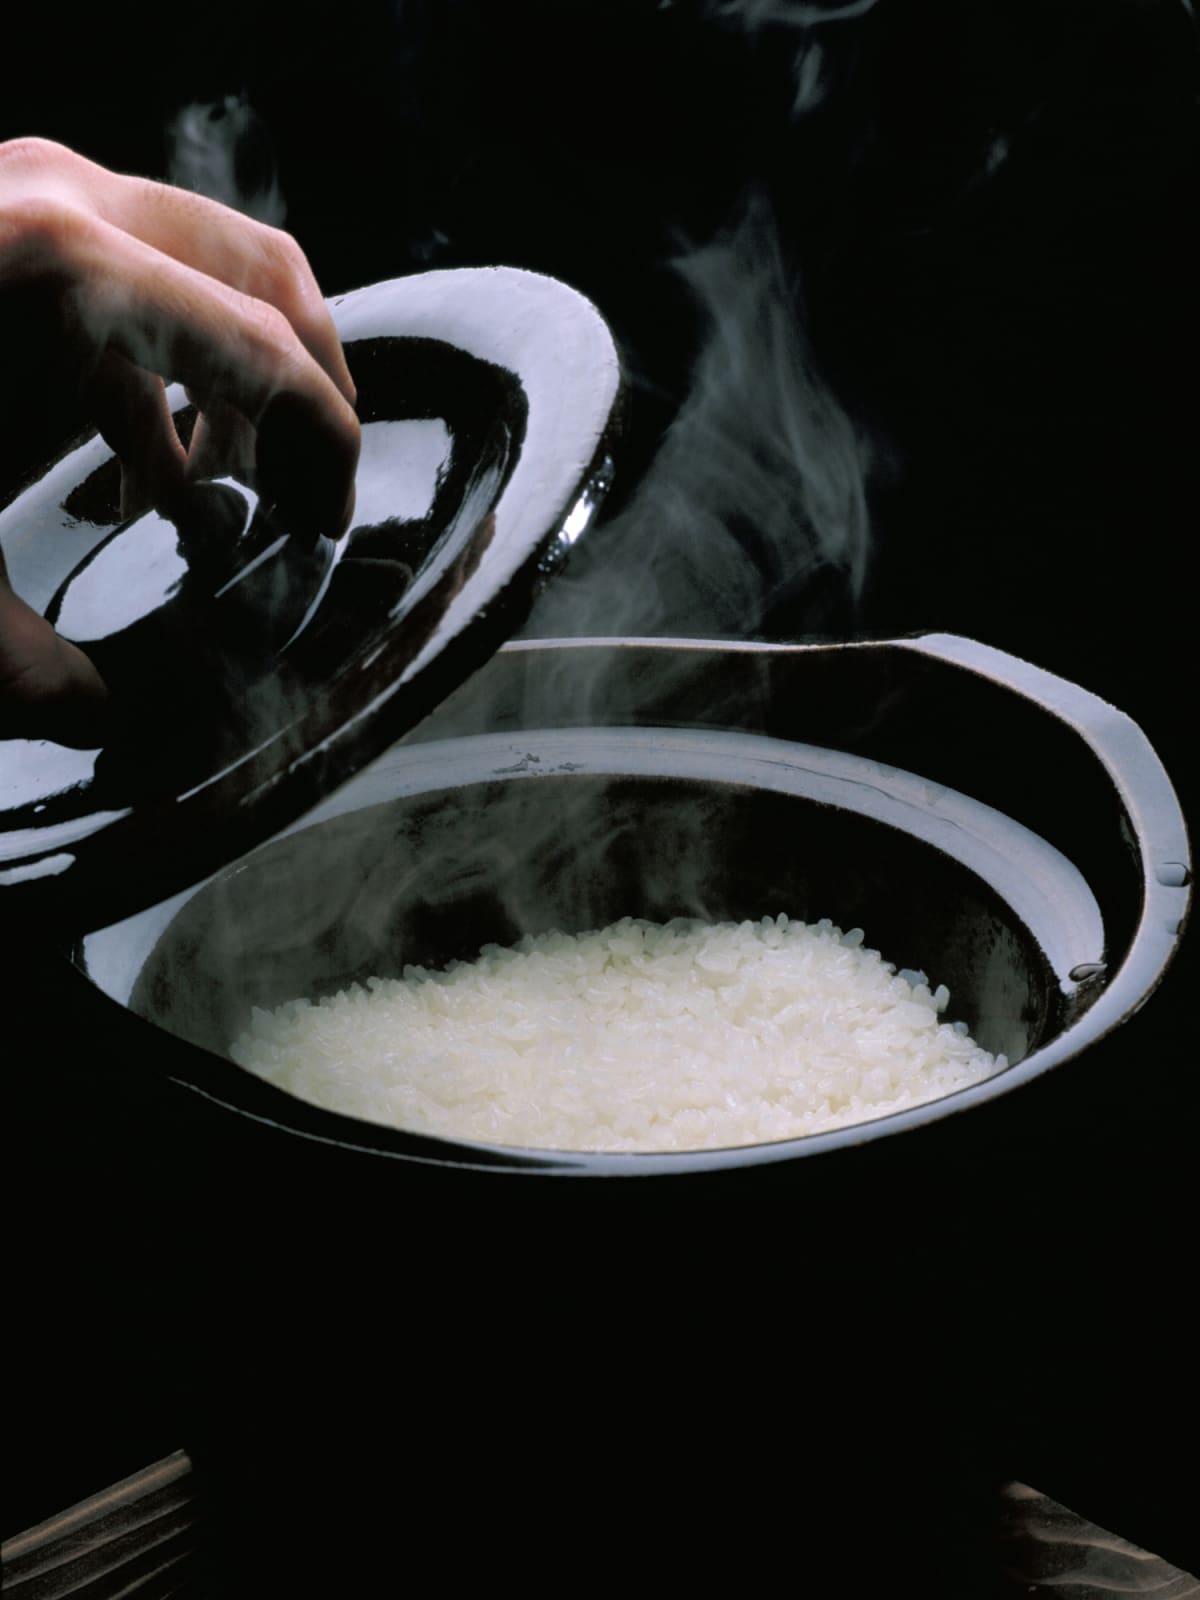 Bowl of Japanese rice